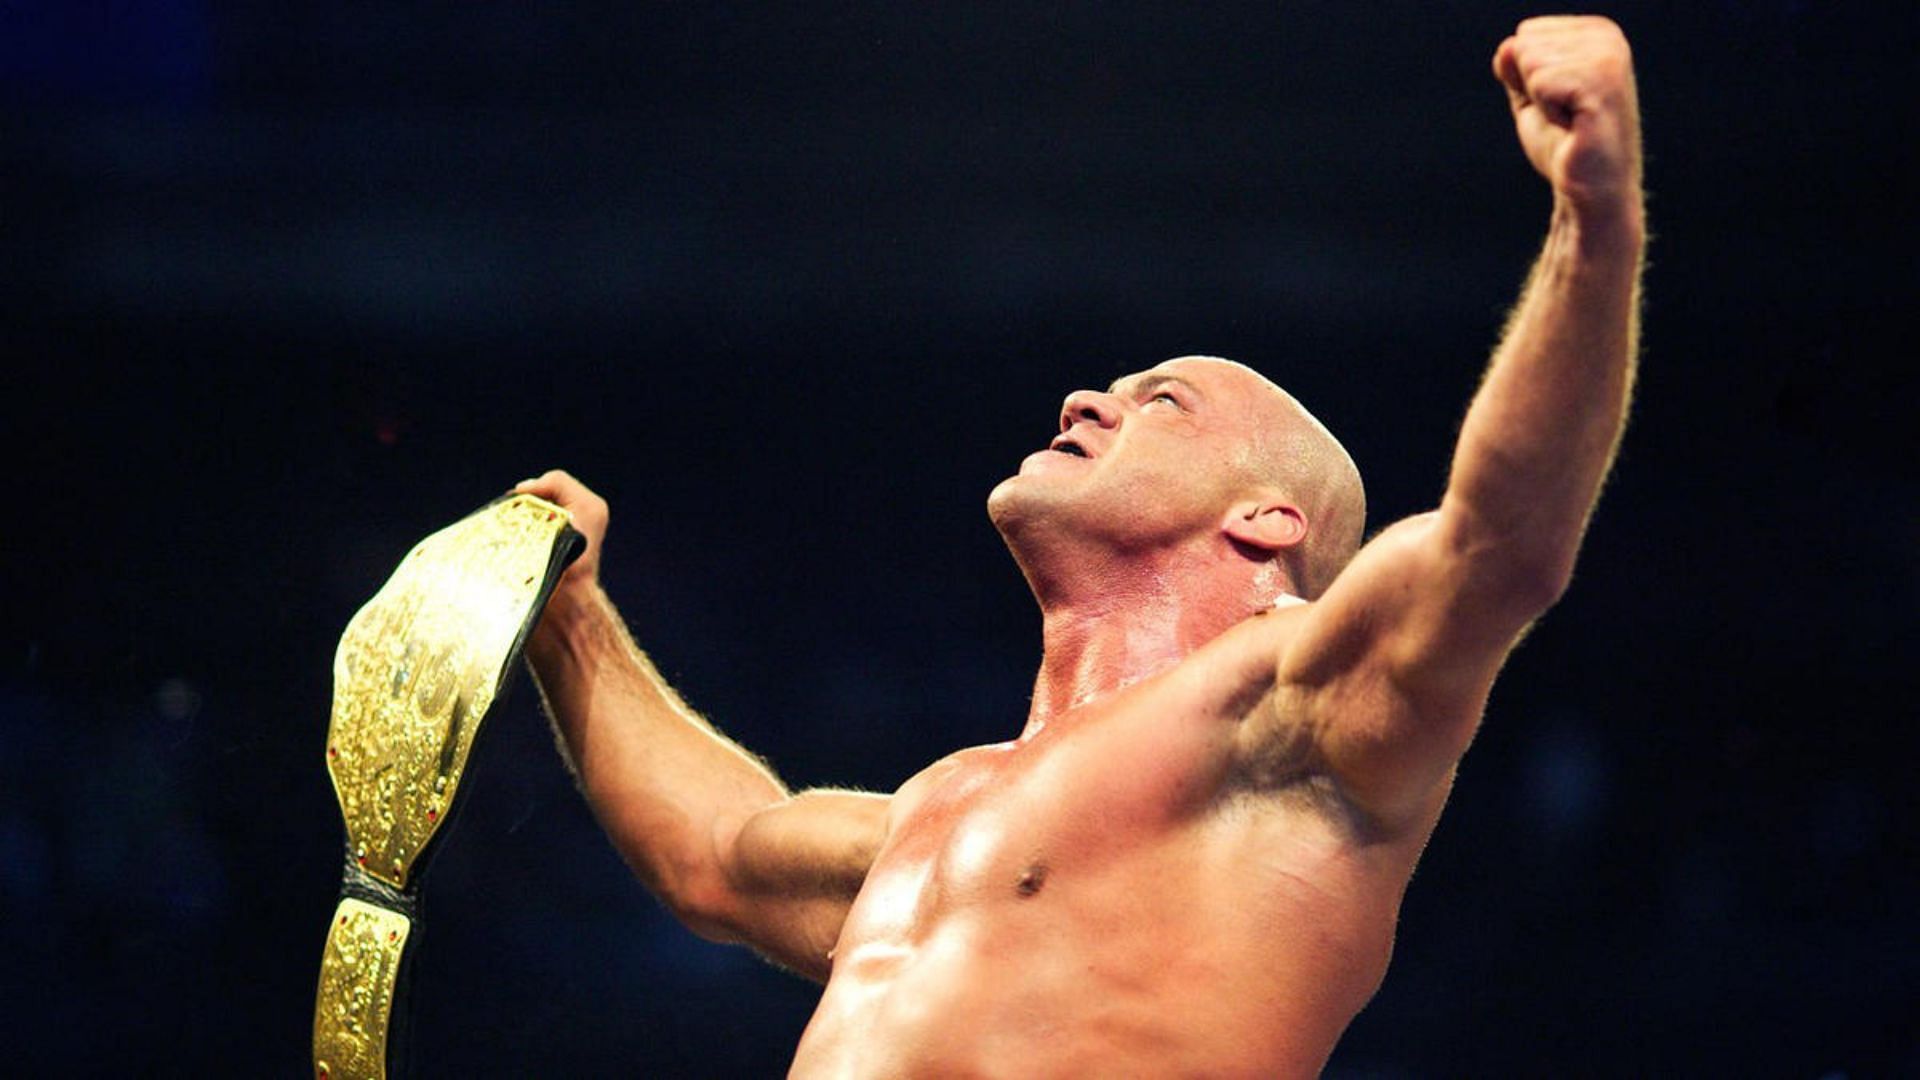 One of the all time greats, WWE Hall of Famer Kurt Angle